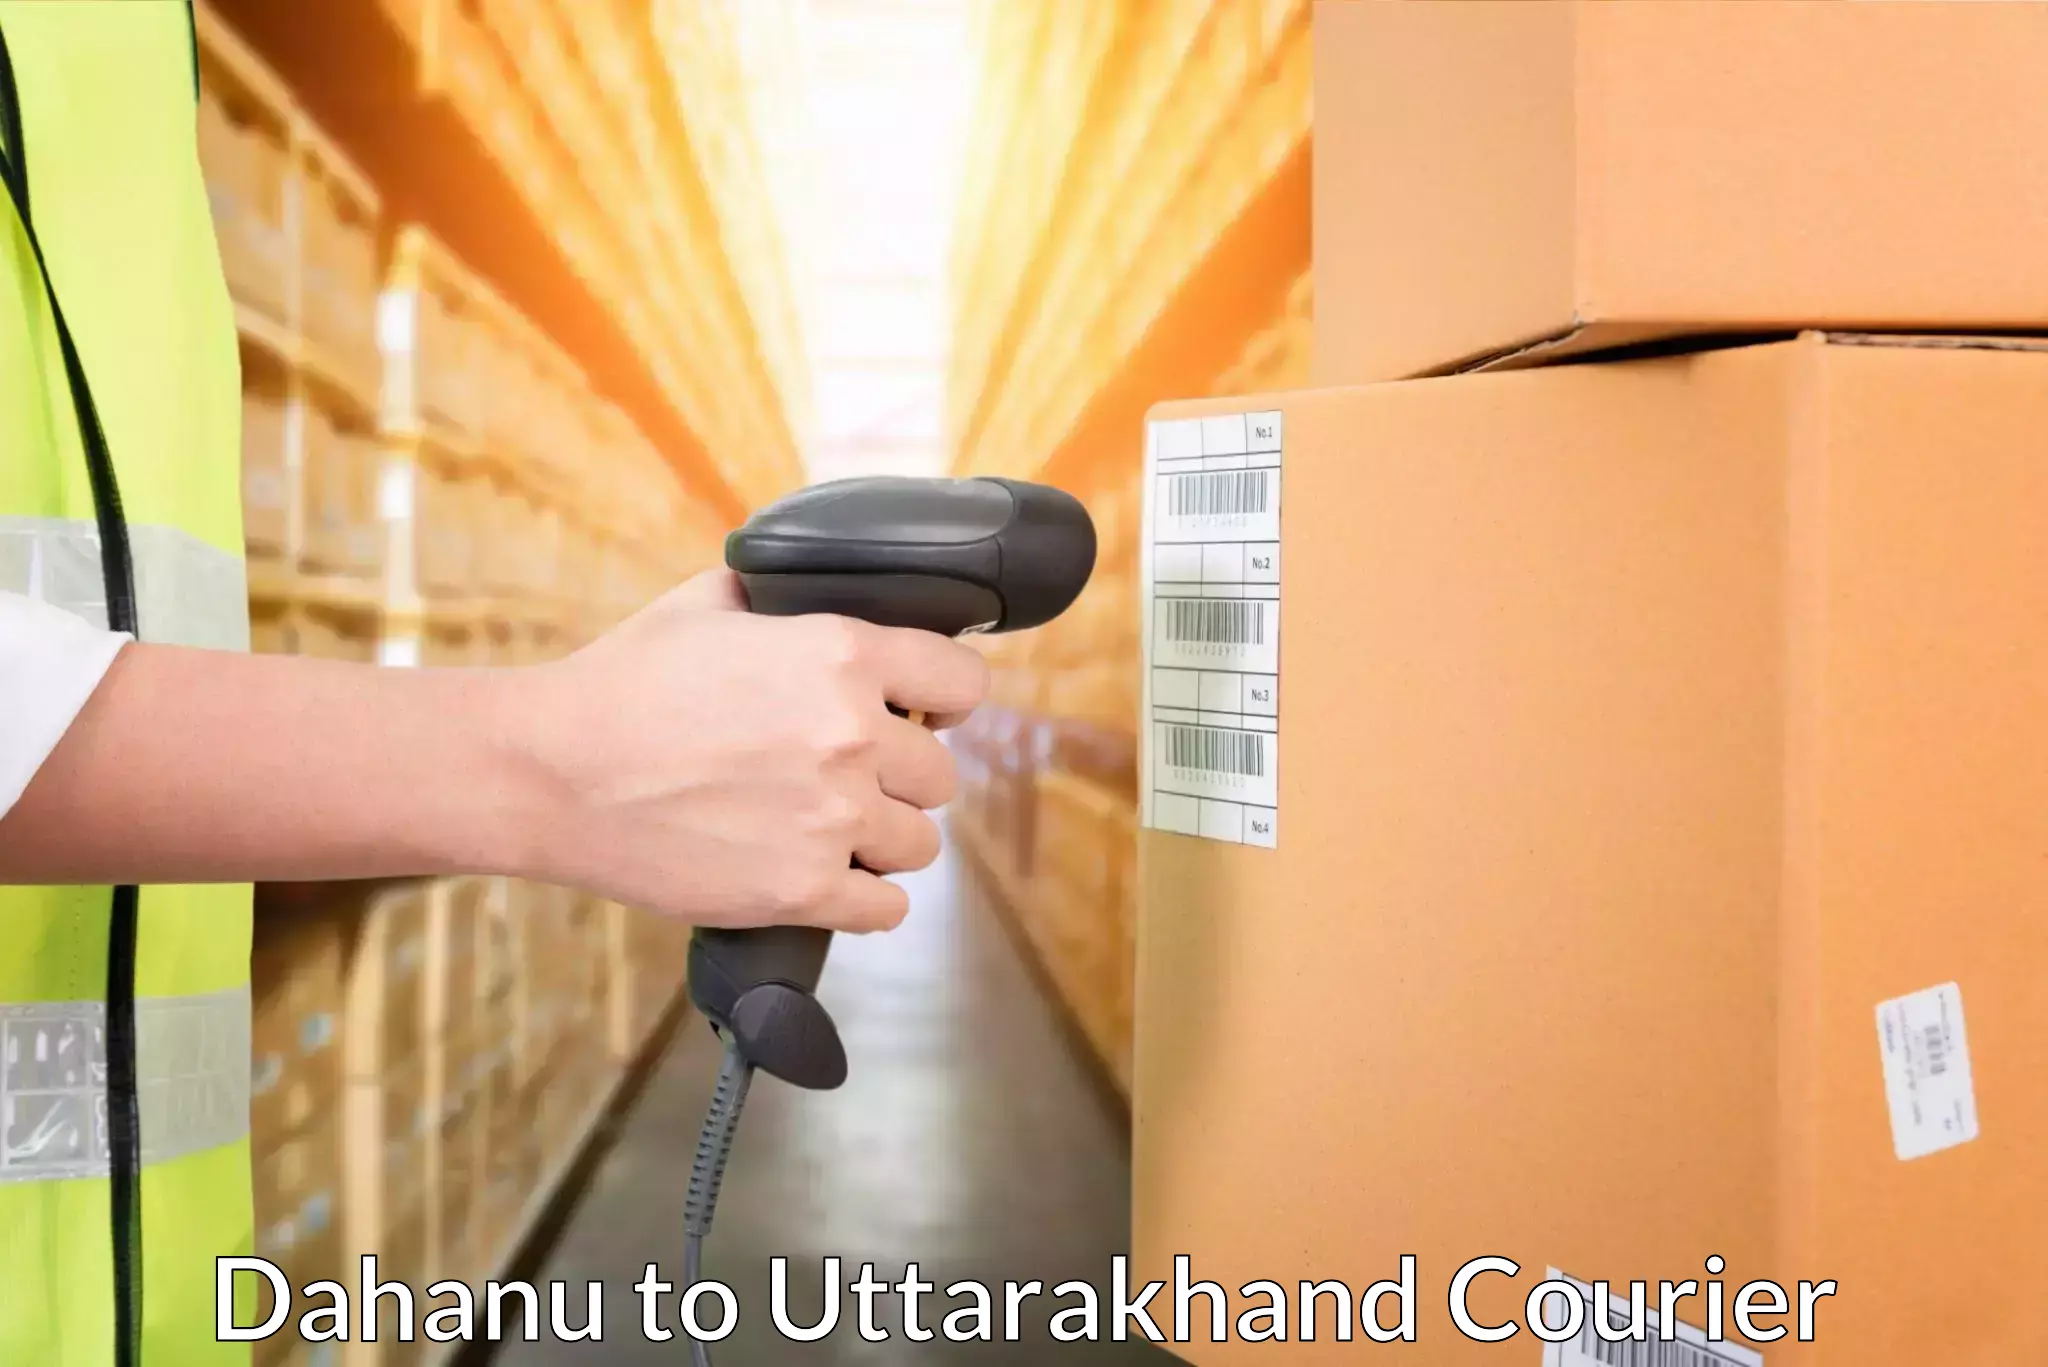 Express delivery capabilities Dahanu to Dehradun